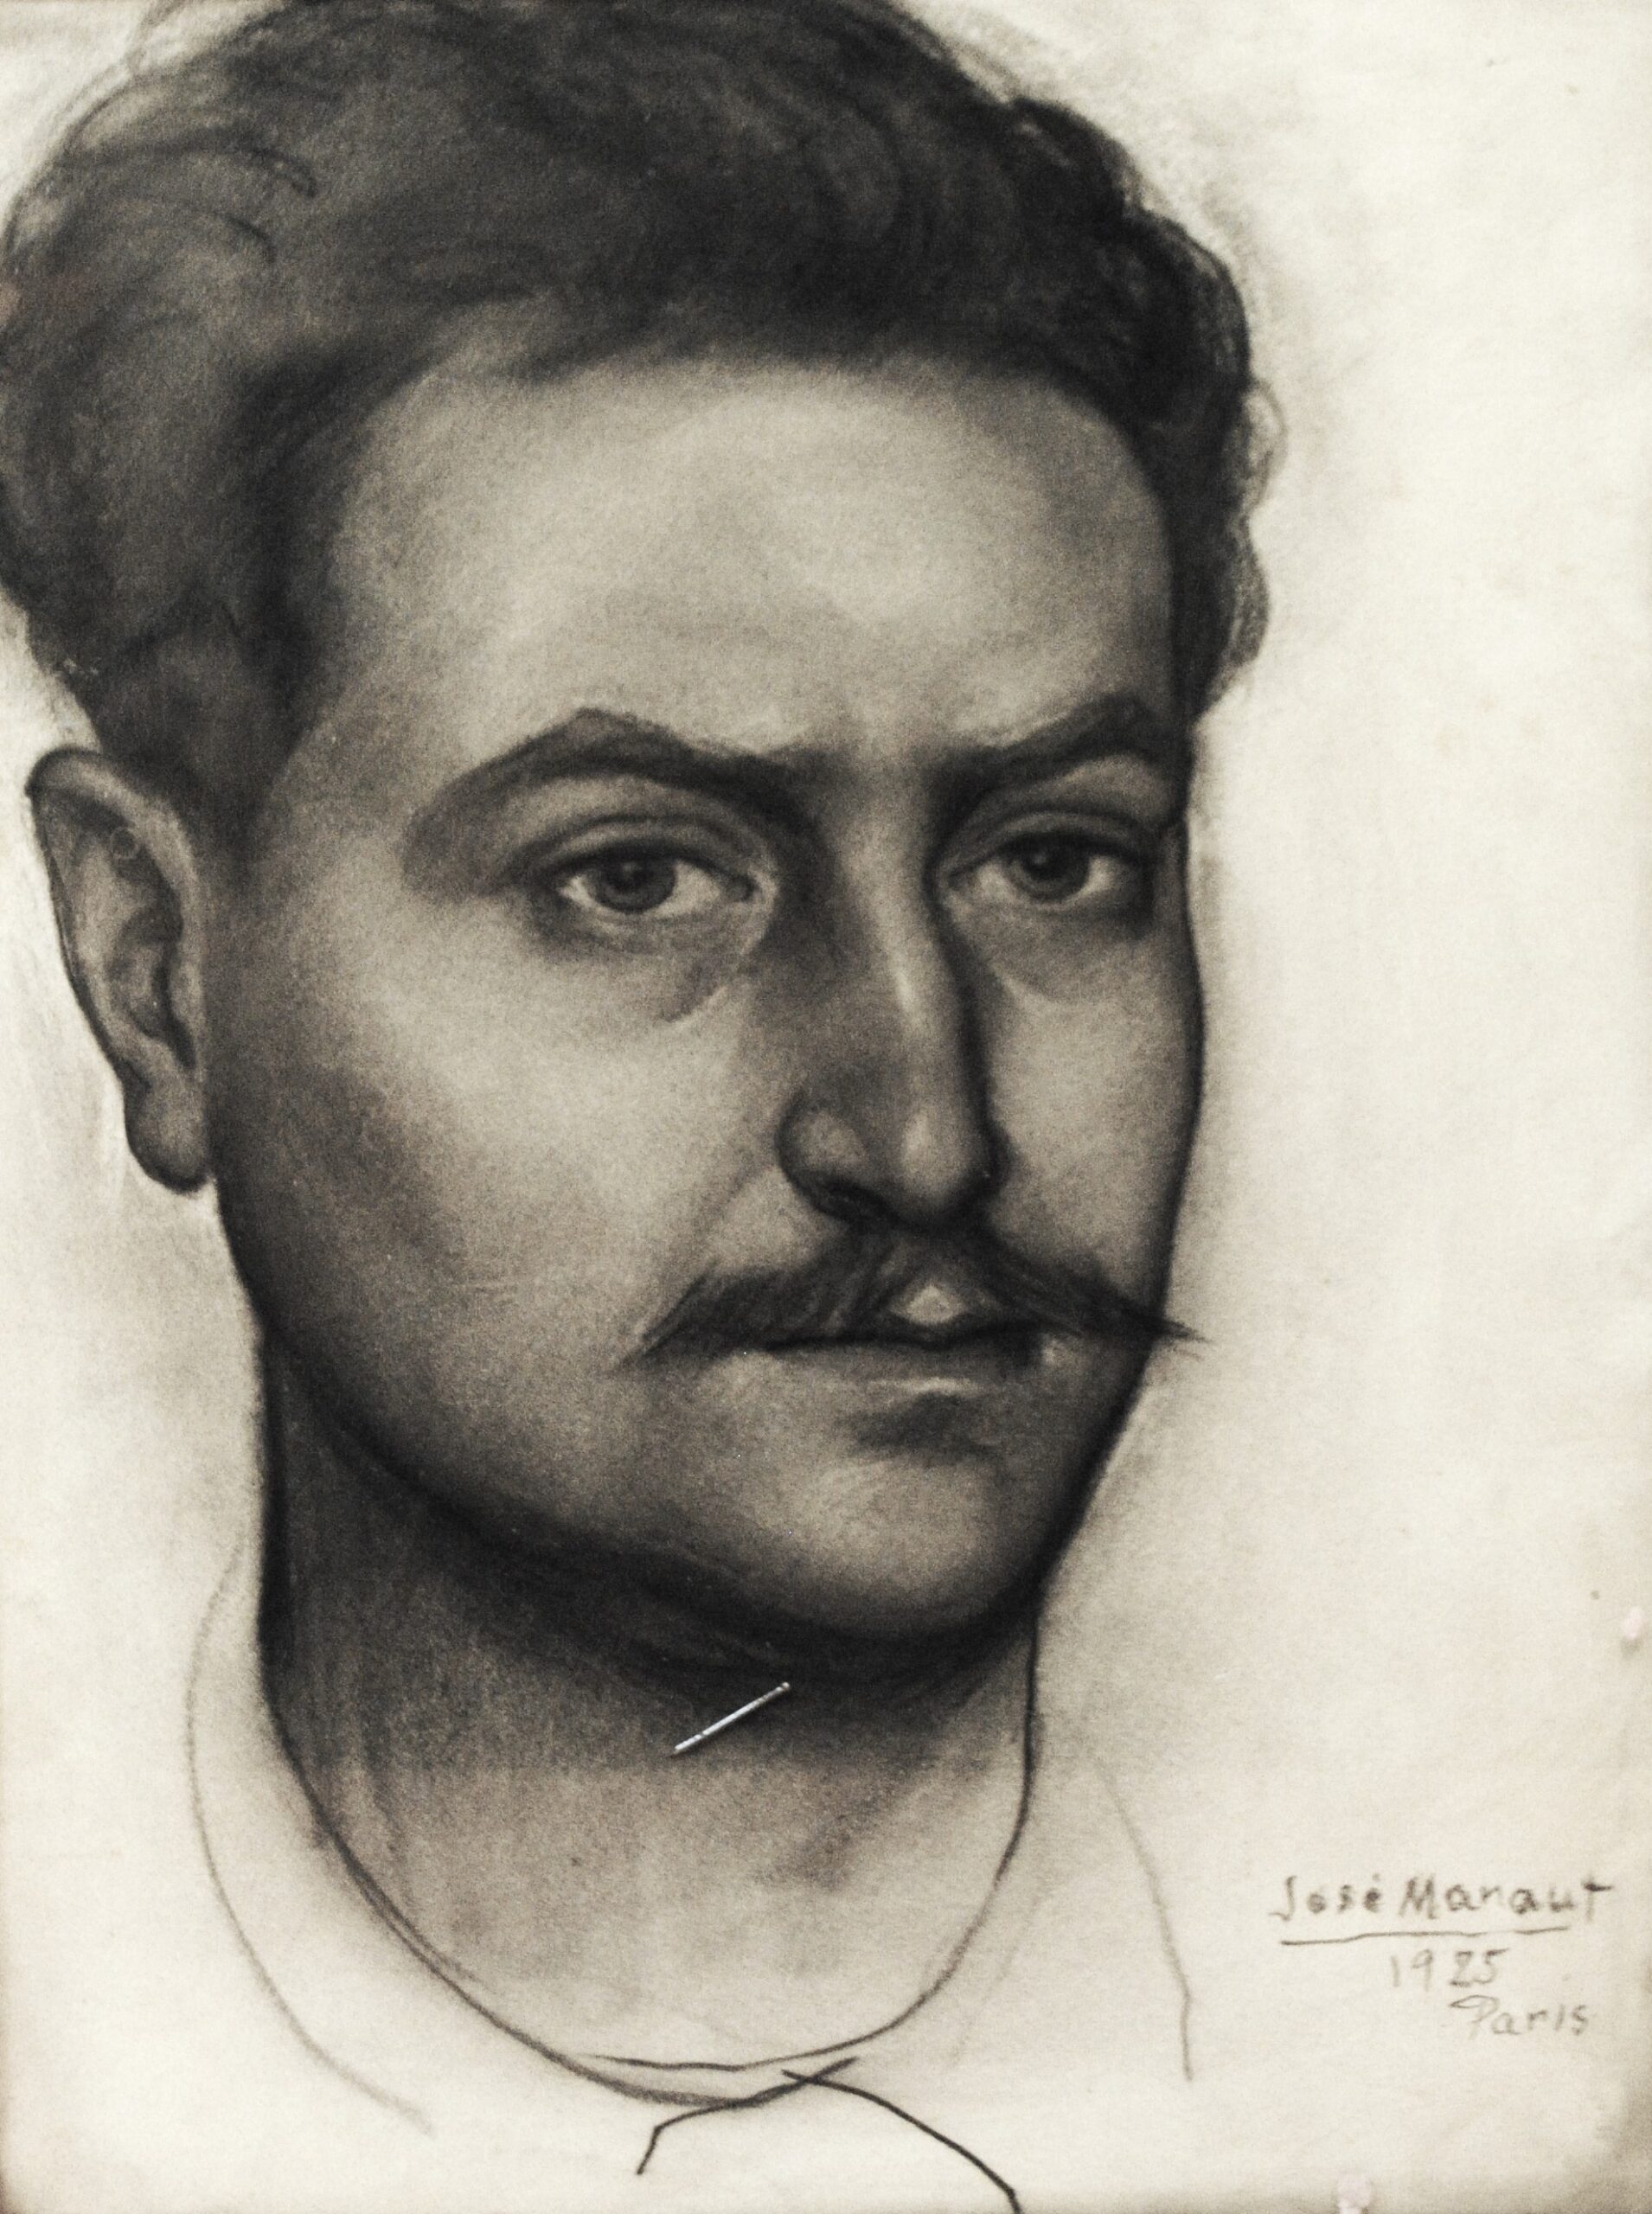 Autorretrato de José Manaut, 1925. Dibujo a lápiz sobre papel.